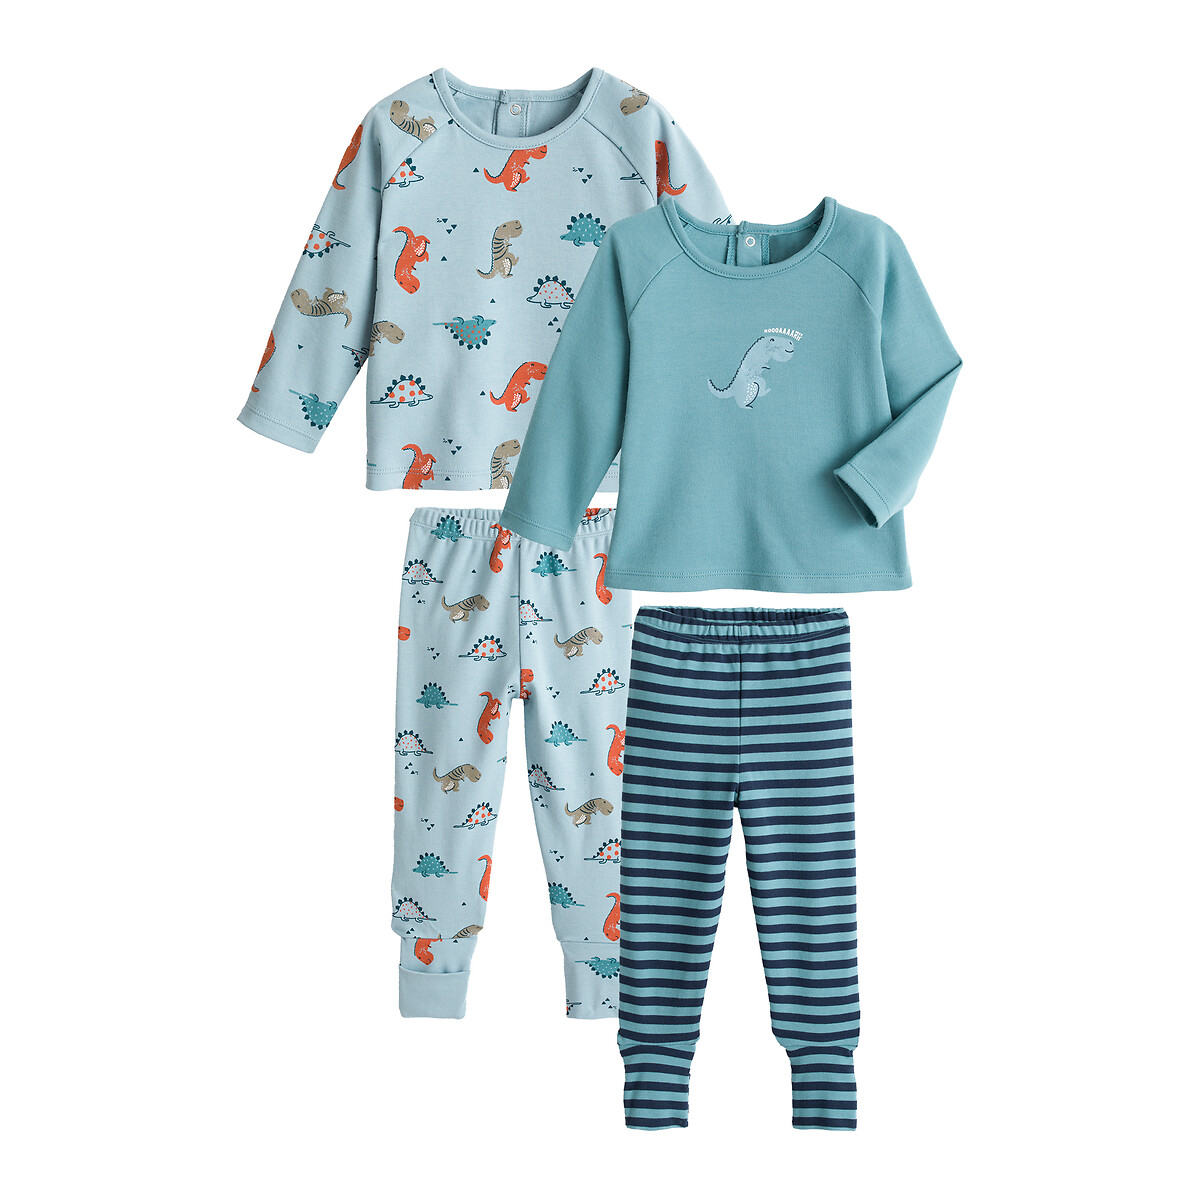 Birth-4 Years La Redoute Collections Big Boys Pack of 2 Velour Zebra Print Pyjamas